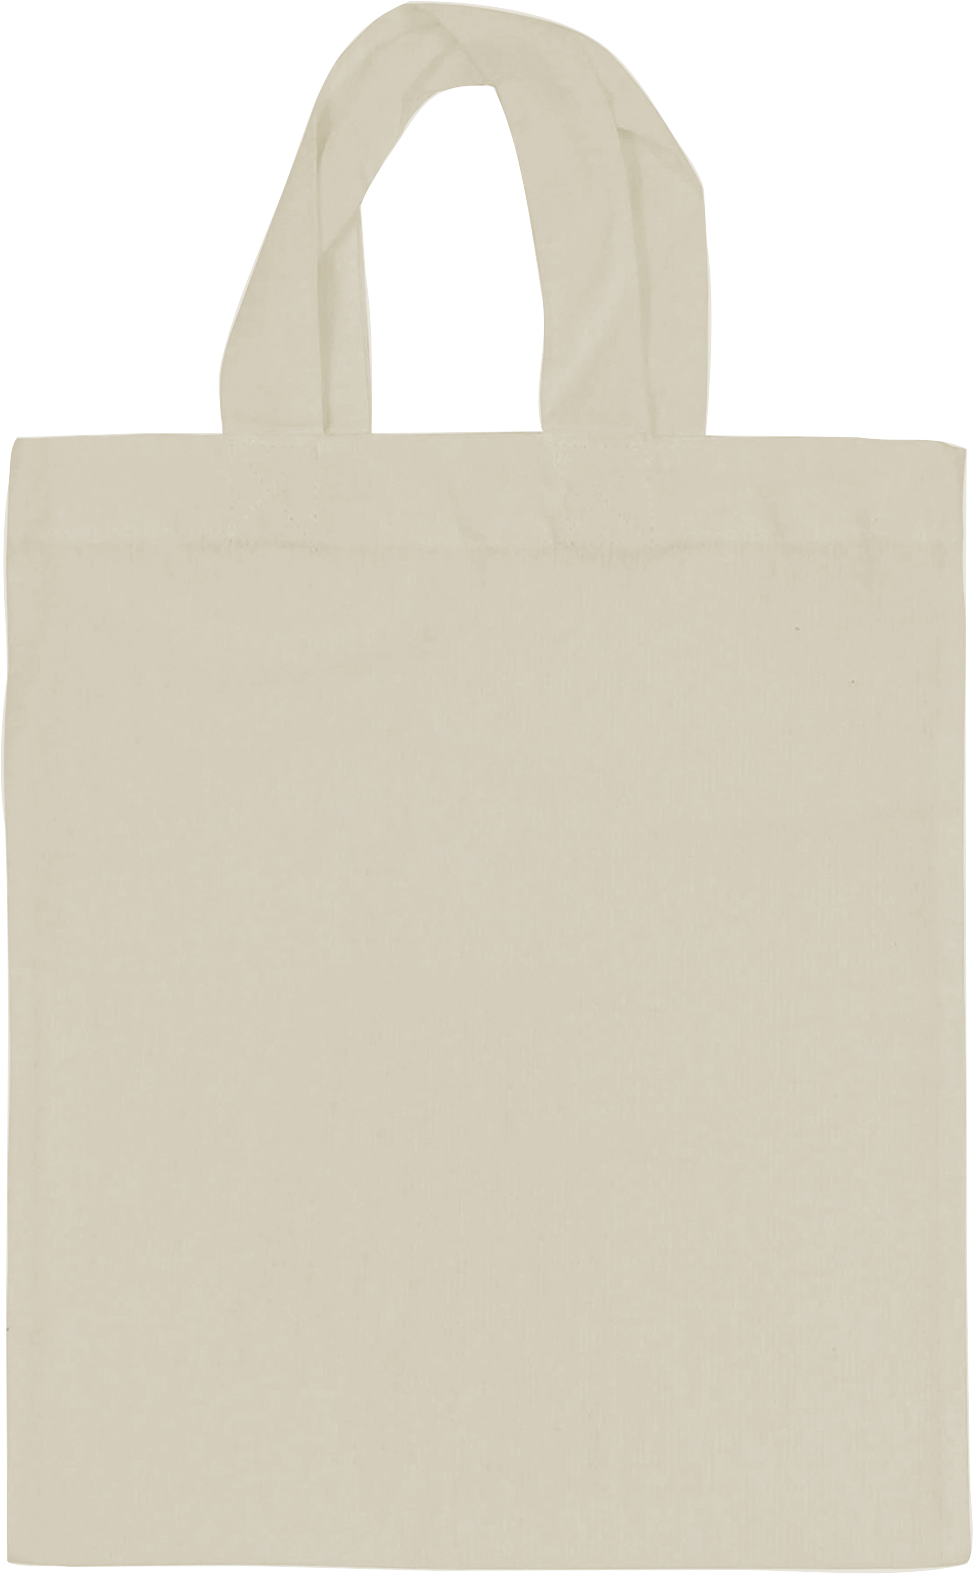 Cool Muslin drawstring bags - White Line Textile Ltd.